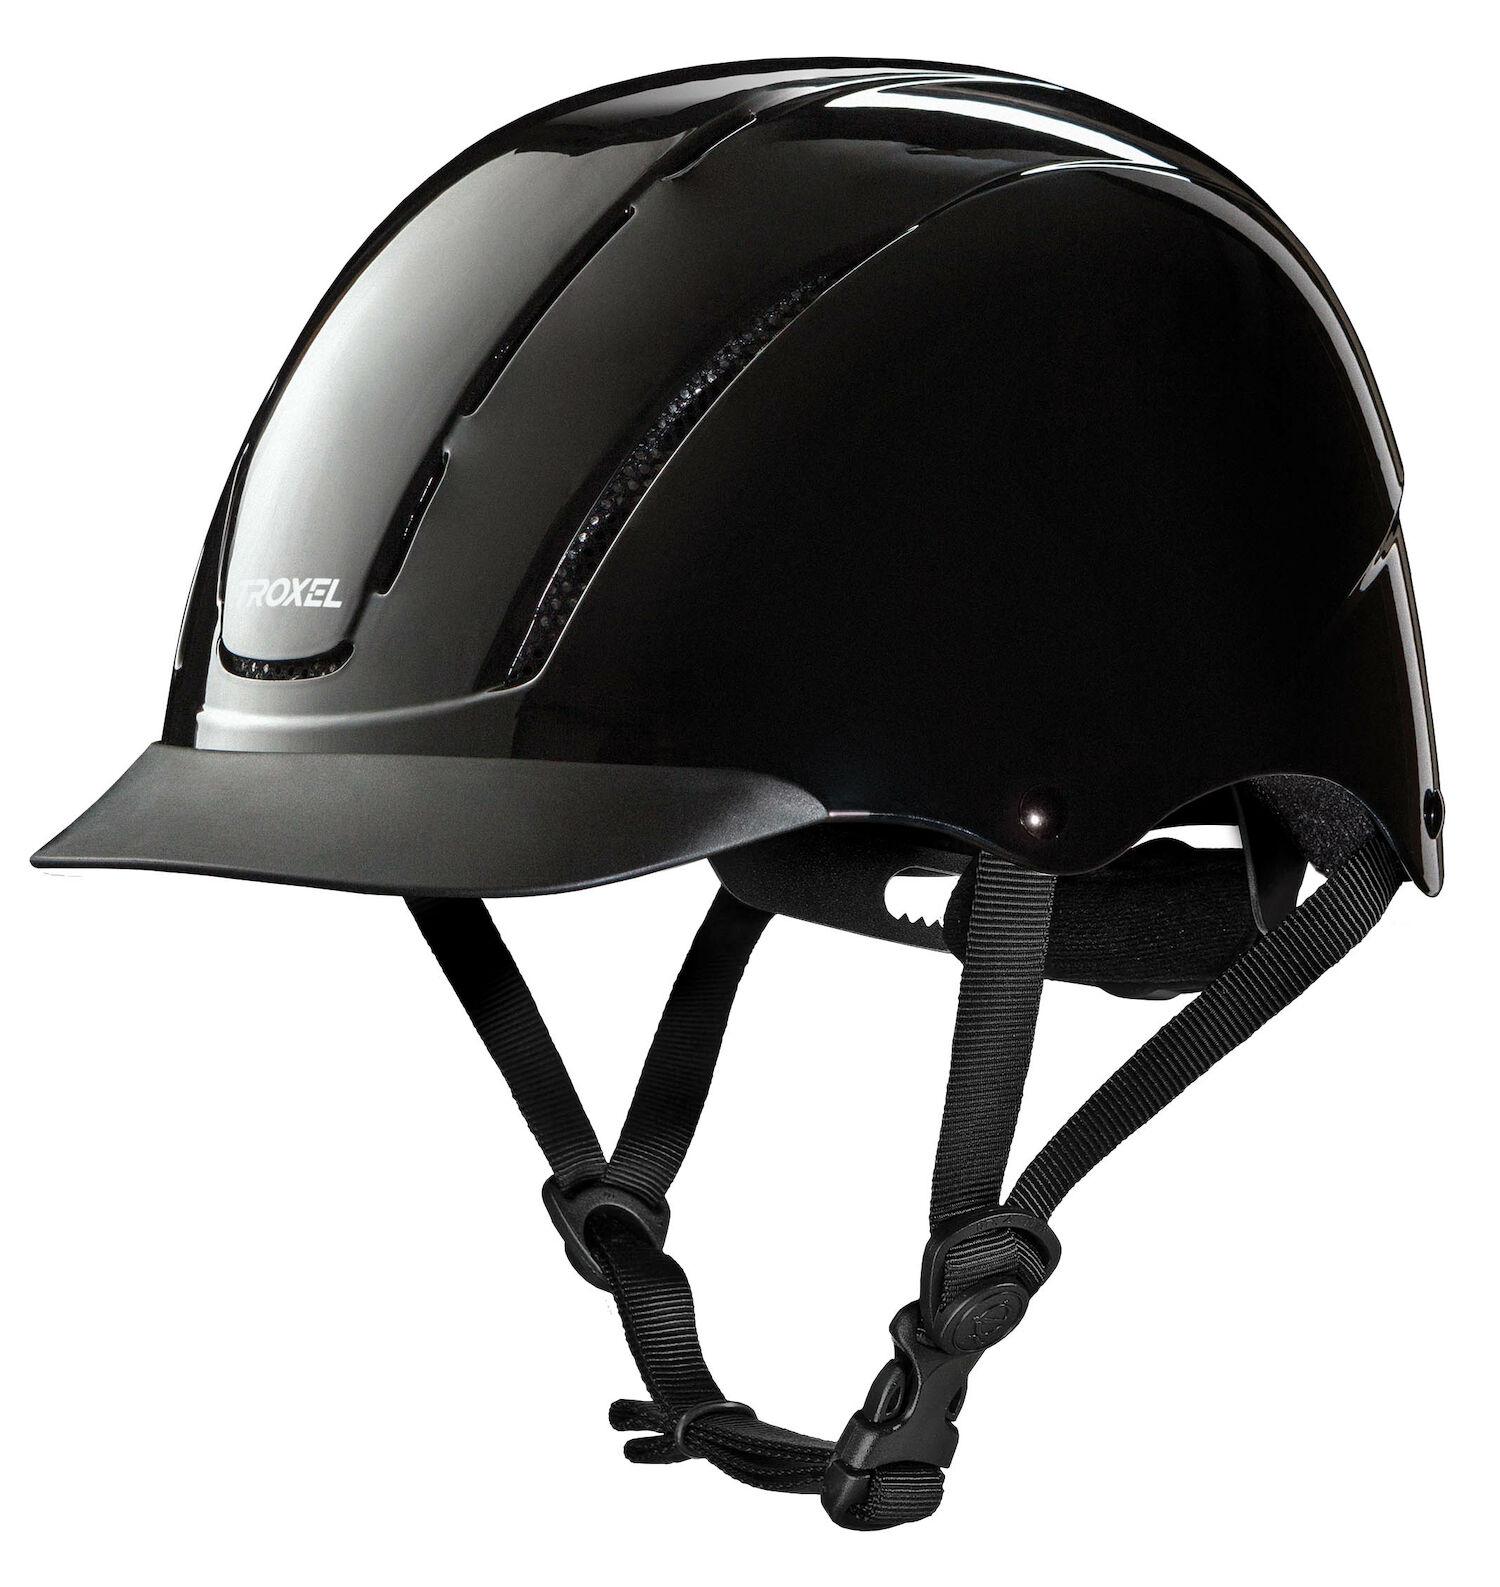 Troxel Spirit Low Profile Riding Helmet